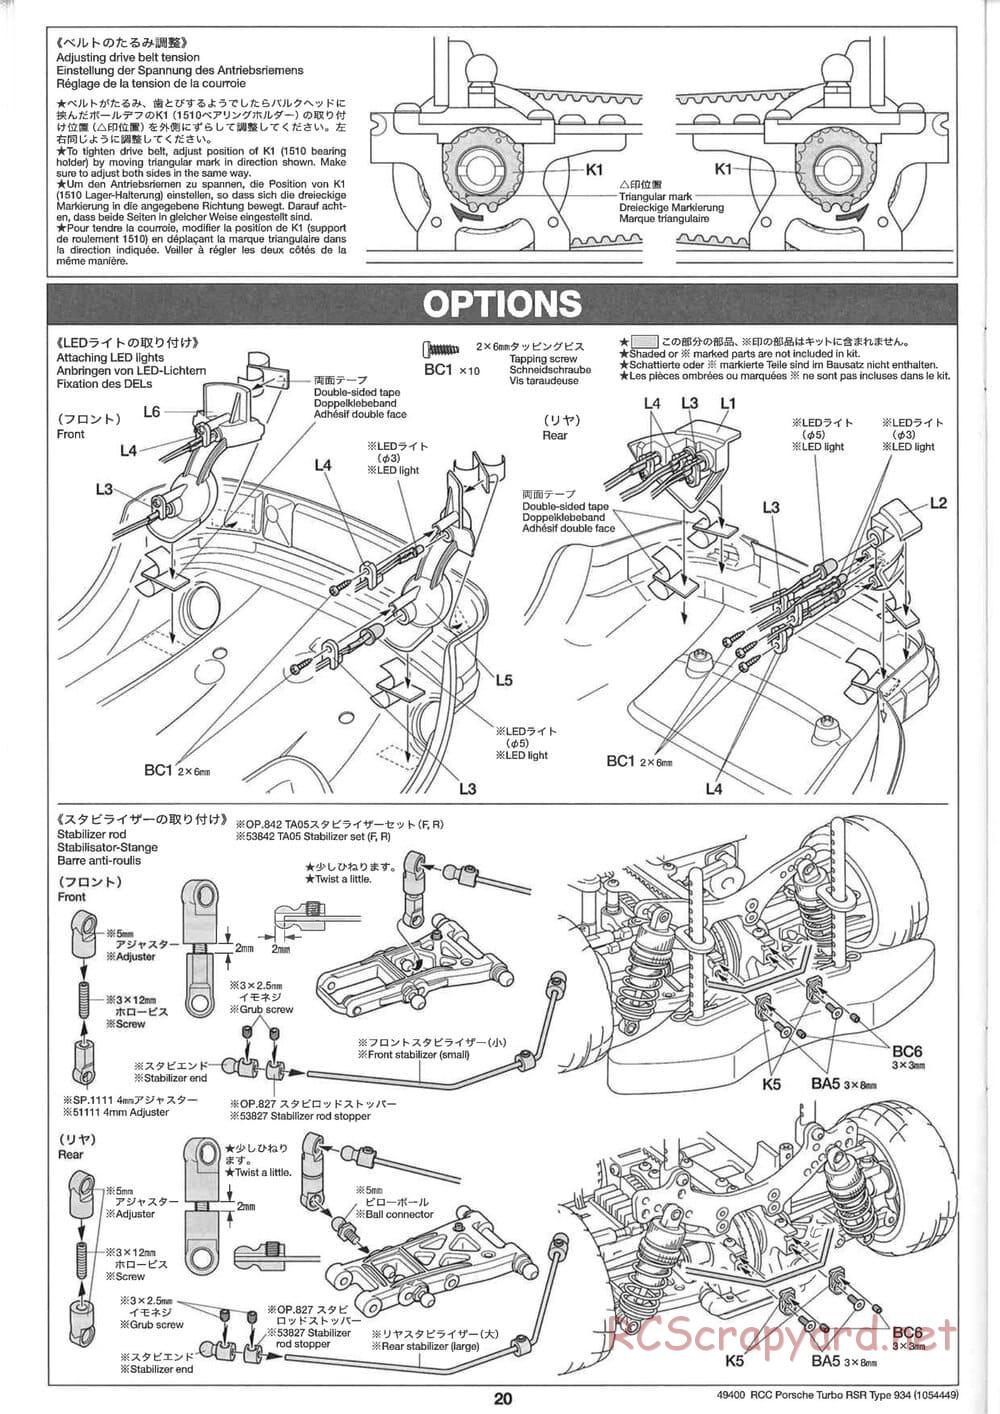 Tamiya - Porsche Turbo RSR Type 934 - TA05 Chassis - Manual - Page 20